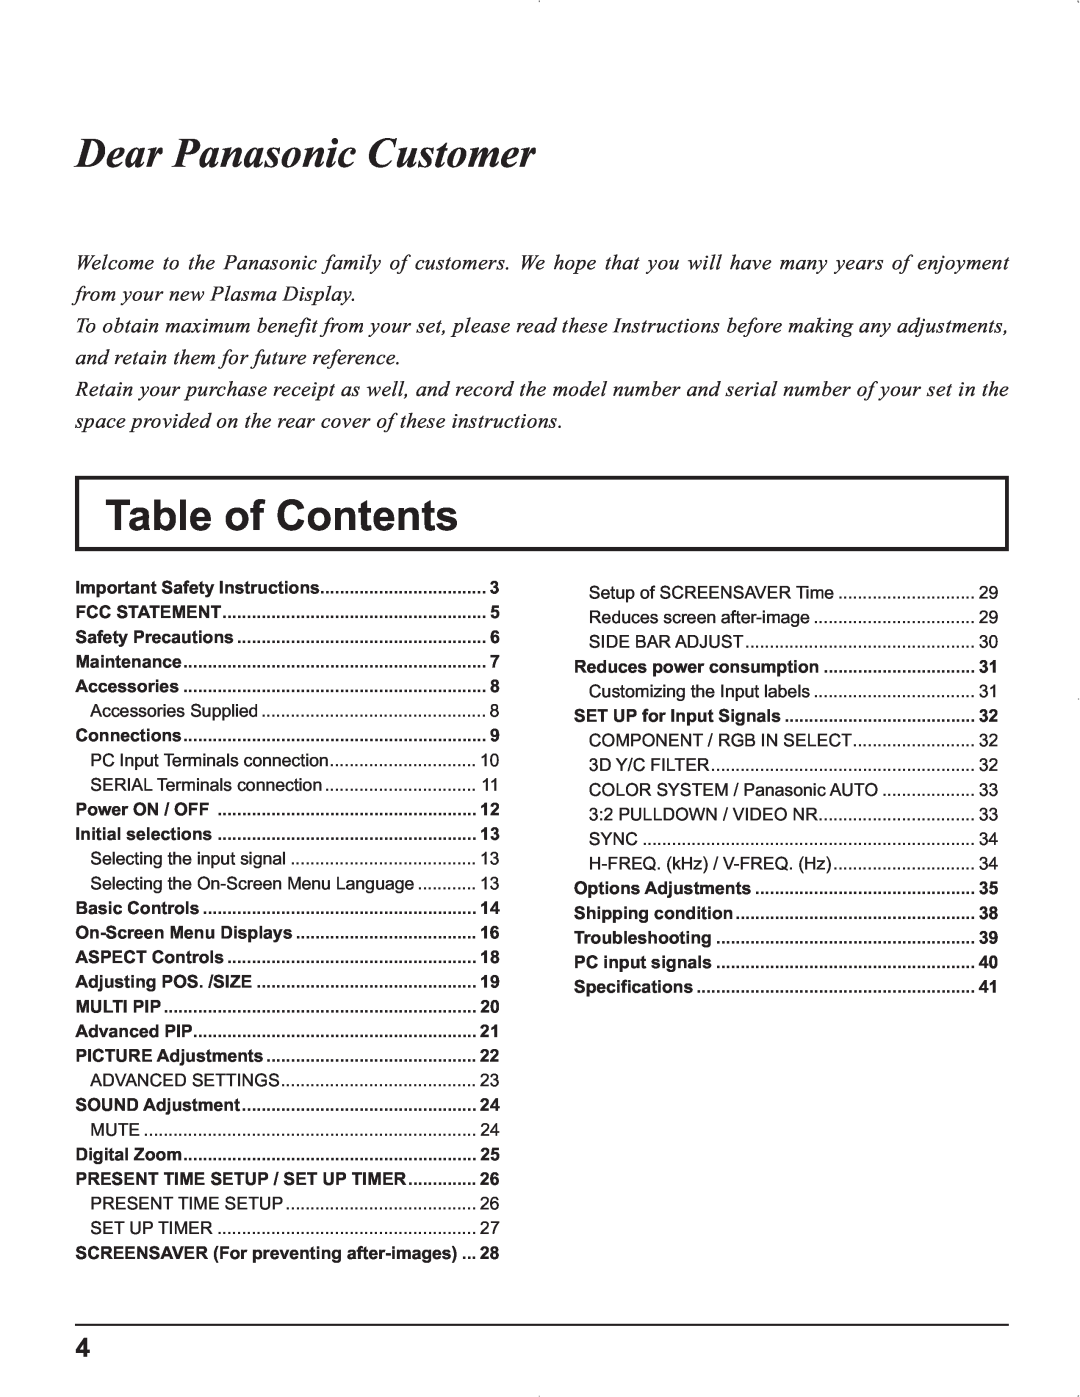 Panasonic TH-37PR9U, TH-37PG9U, TH-42PG9U, TH-42PR9U manual Dear Panasonic Customer, Table of Contents 